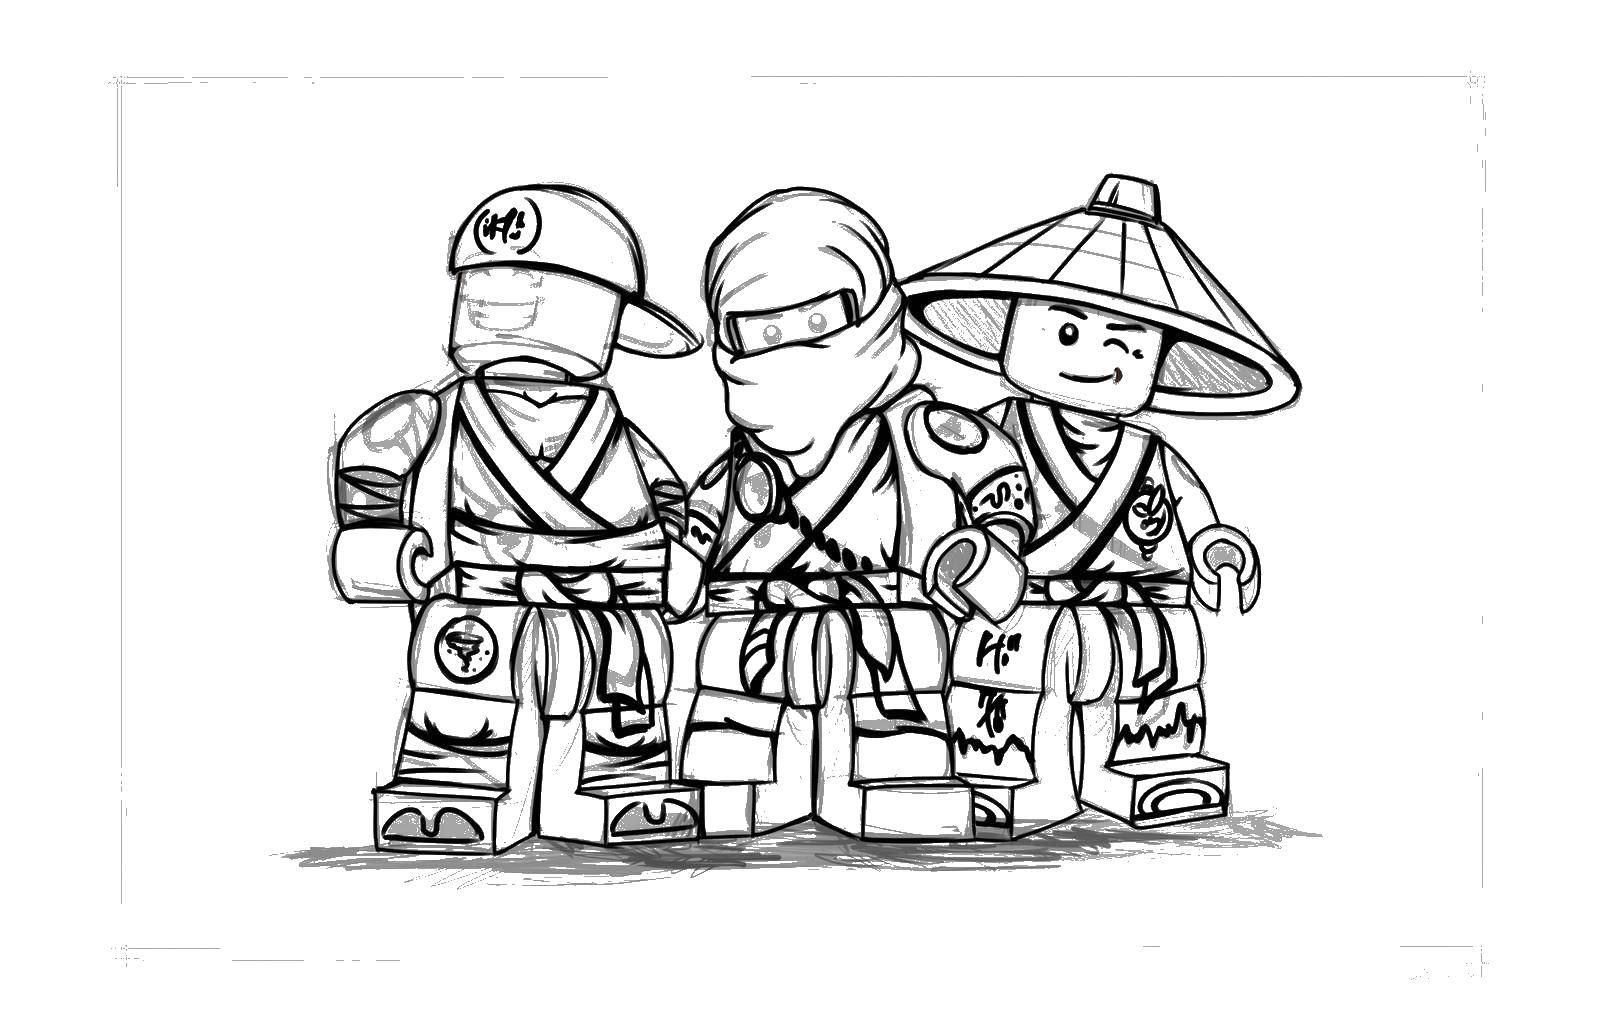 Название: Раскраска Команда ниндзя. Категория: ниндзя. Теги: Ниндзя, воин.